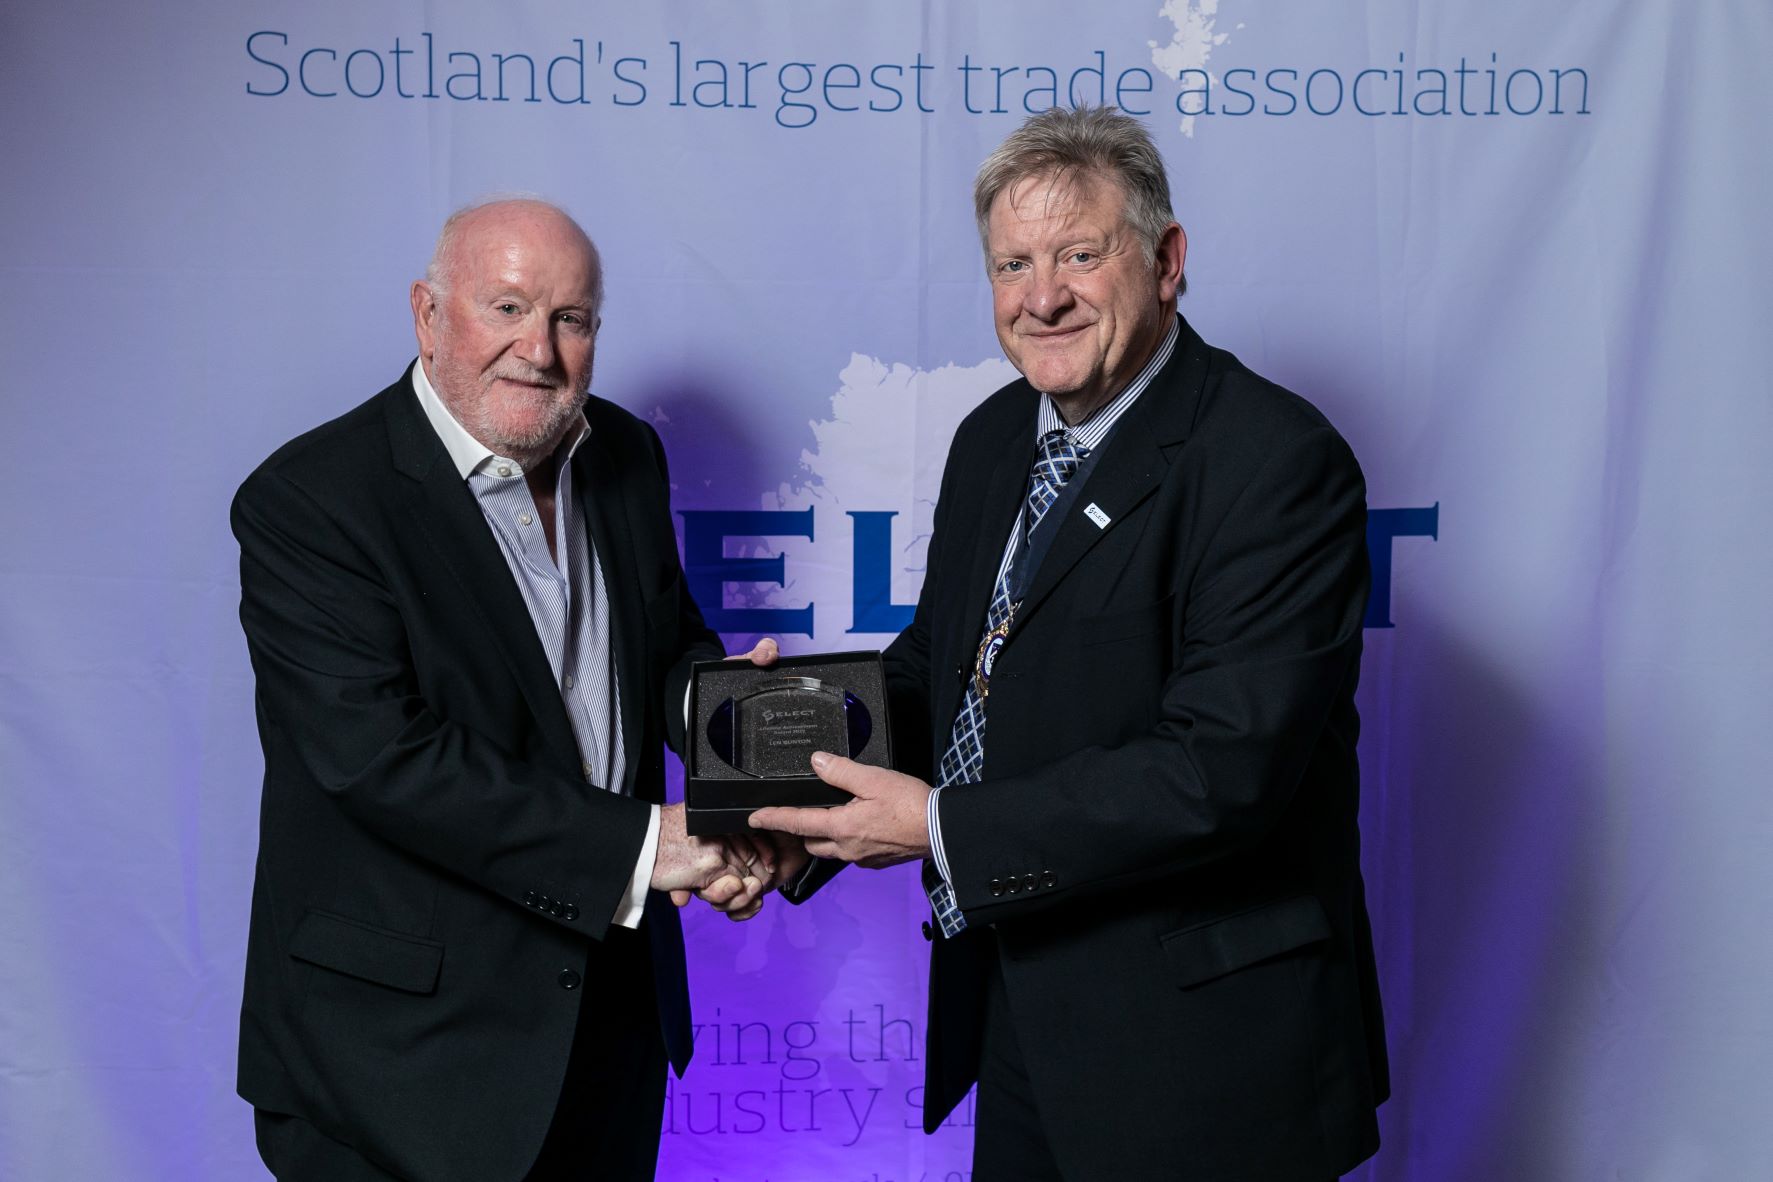 SELECT recognises career of Len Bunton with Lifetime Achievement Award